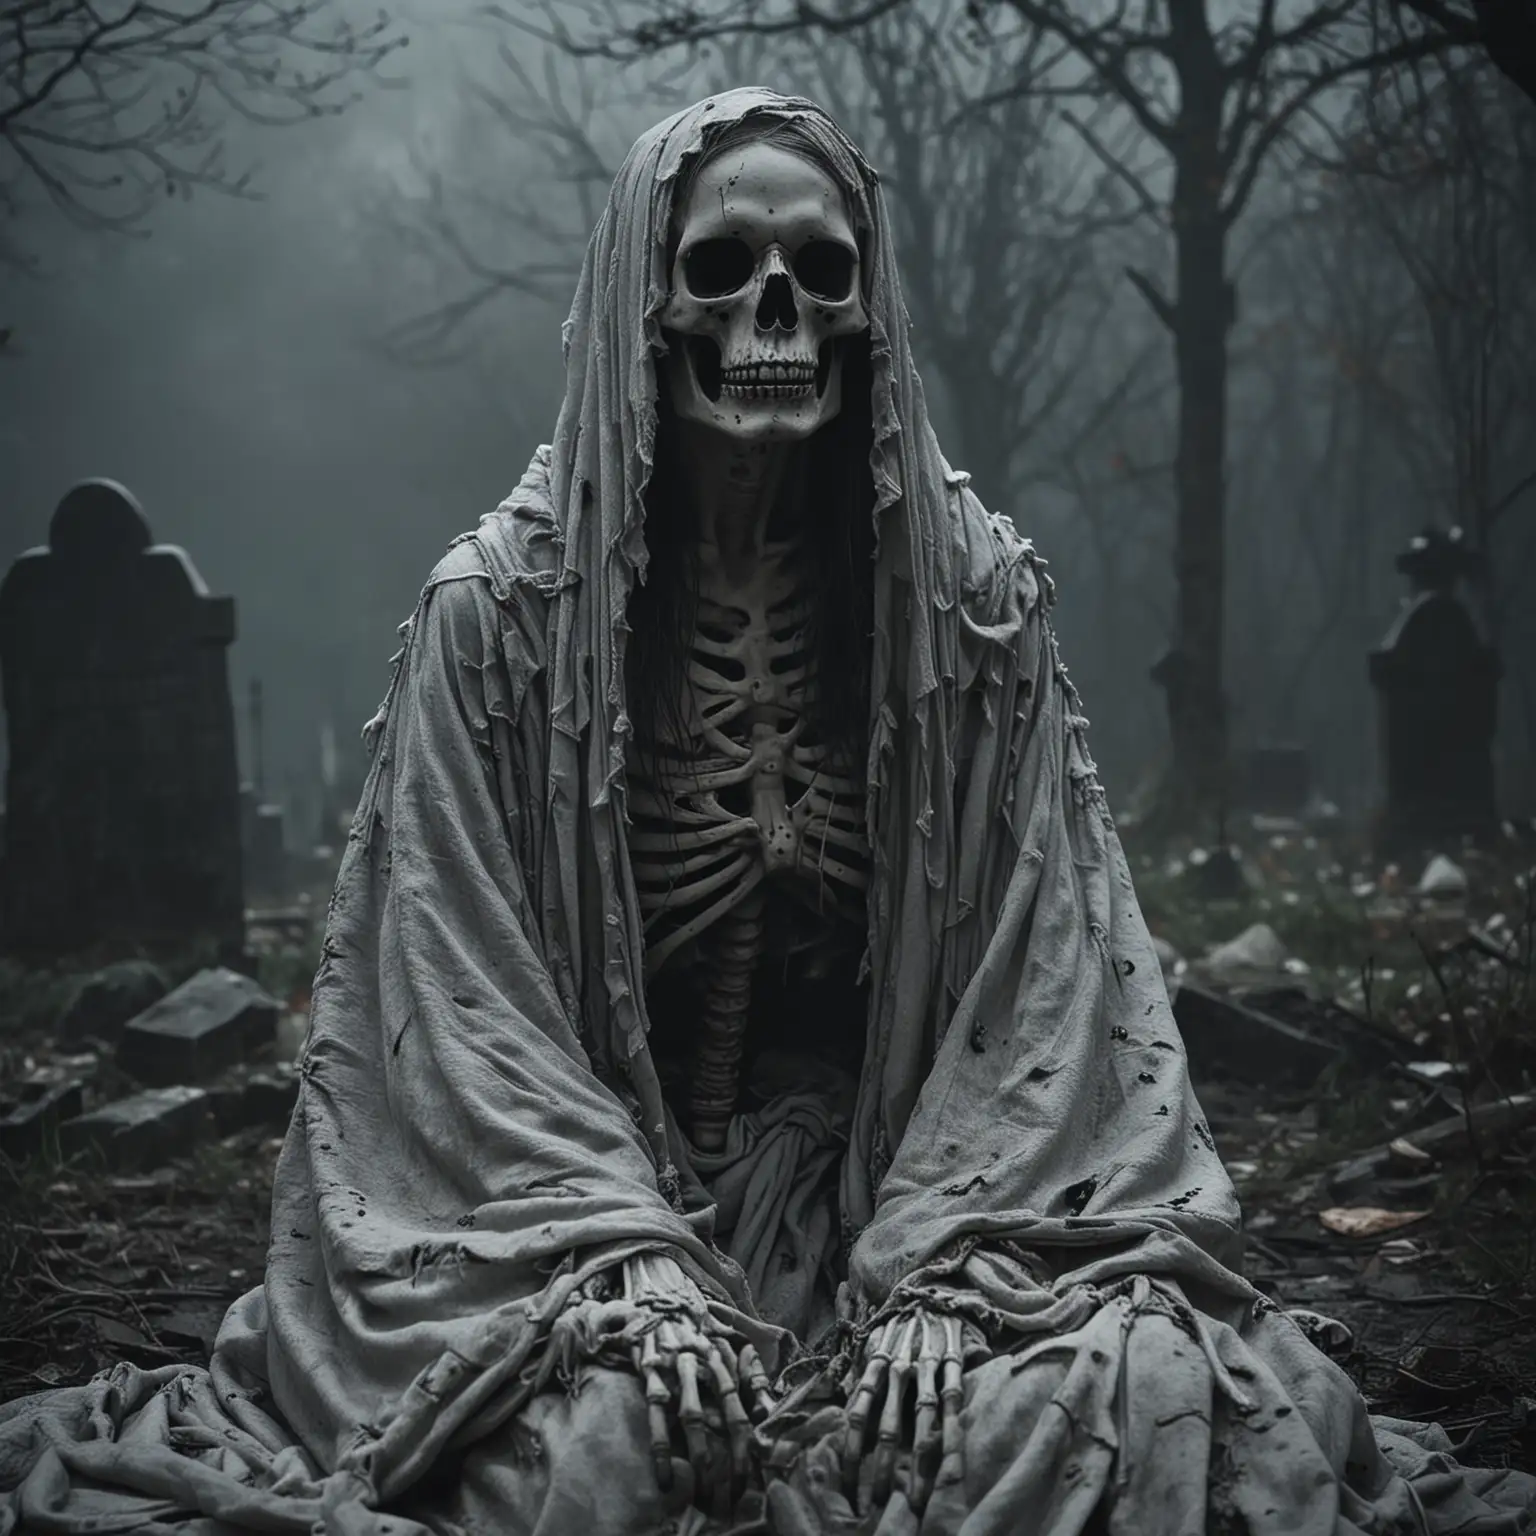 Horror, Gothic, skeleton, slain, torn robe, misty, grave, night, abandoned, creepy, dirty robe, close up